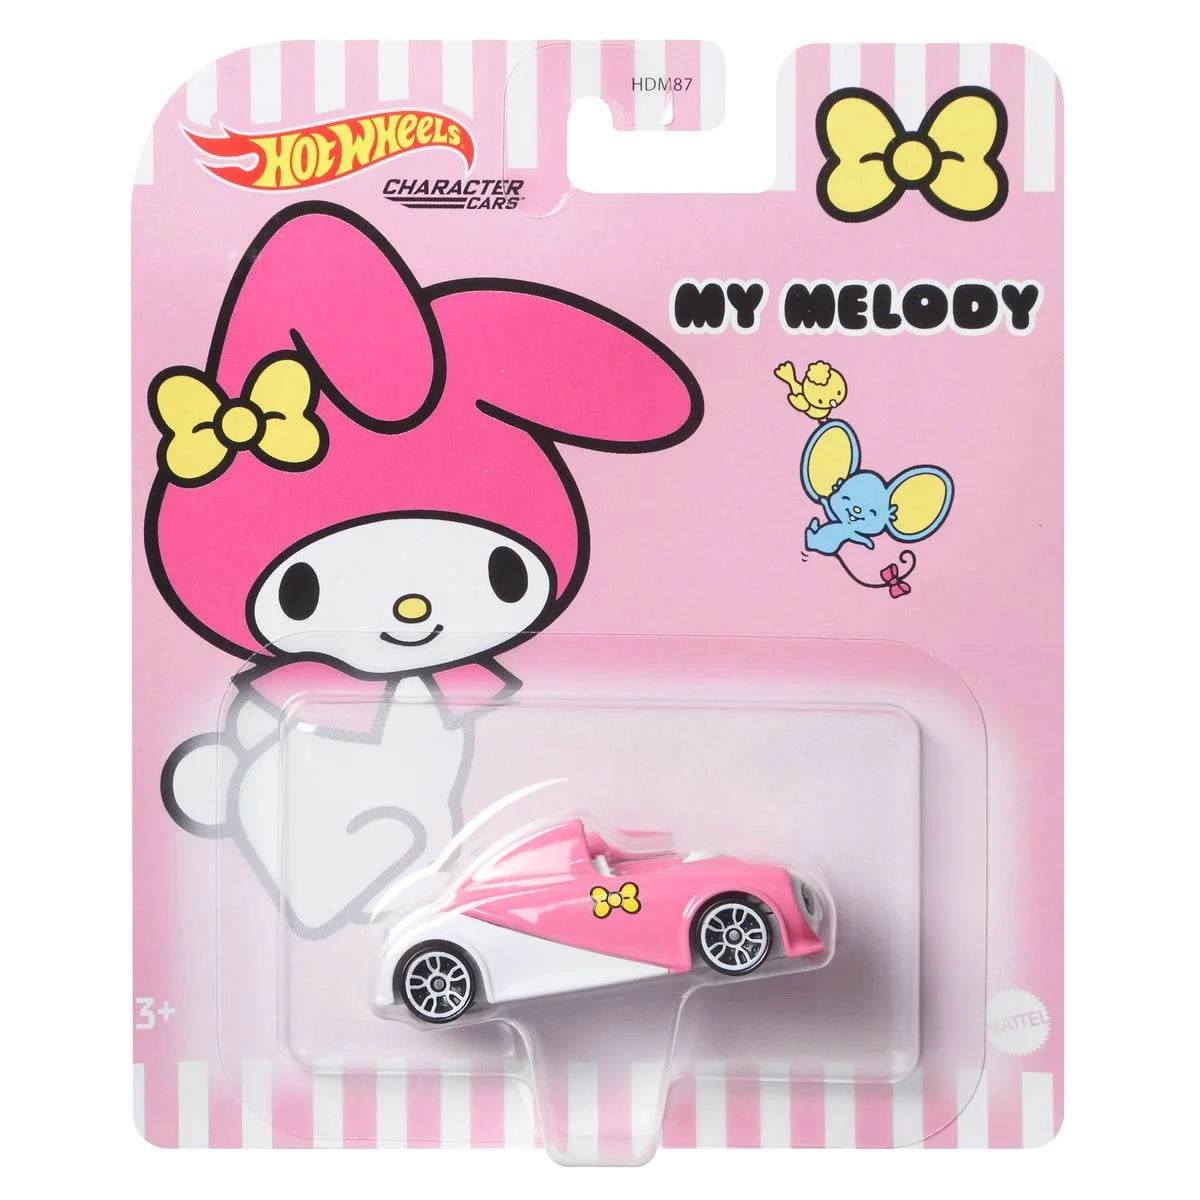 Hot Wheels Hello Kitty Character Cars By Sanrio Myanmar